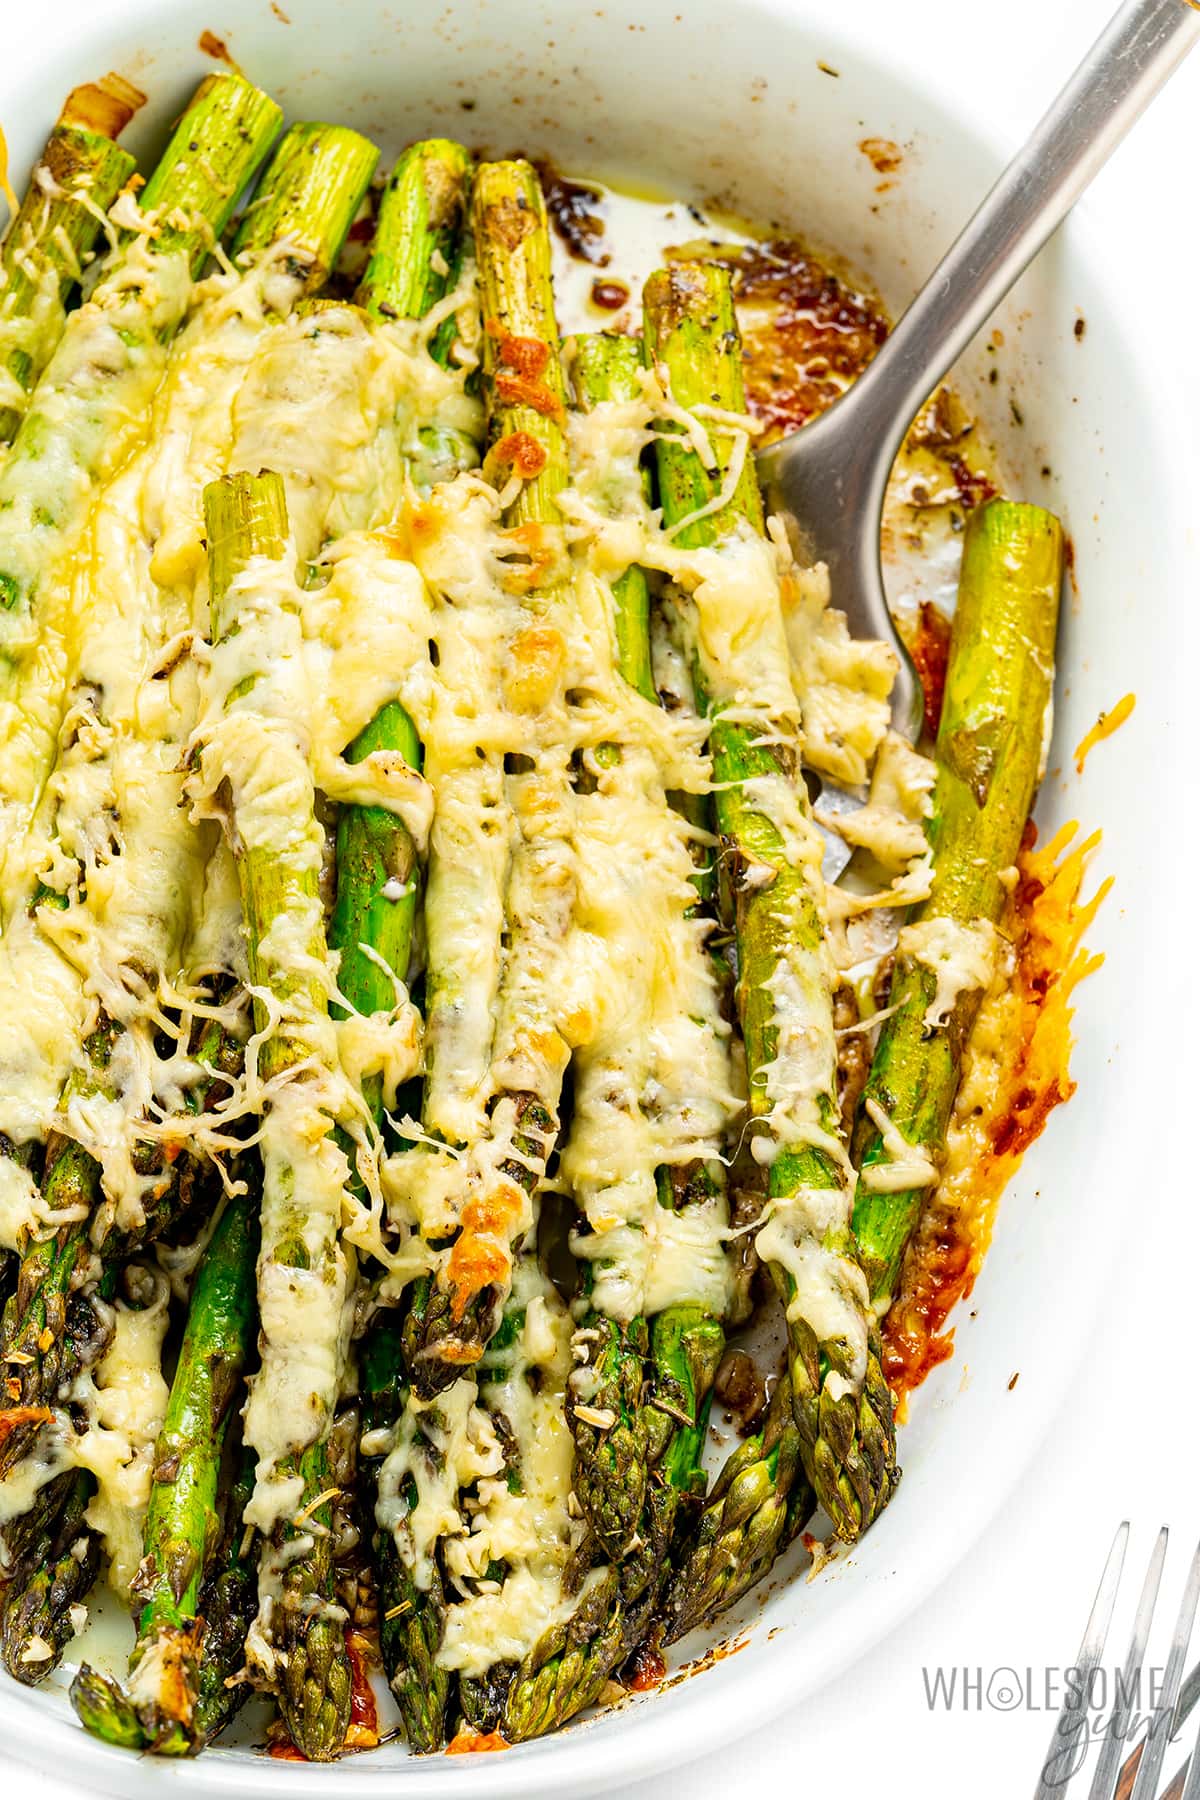 Cheesy asparagus in a casserole dish with a spatula.